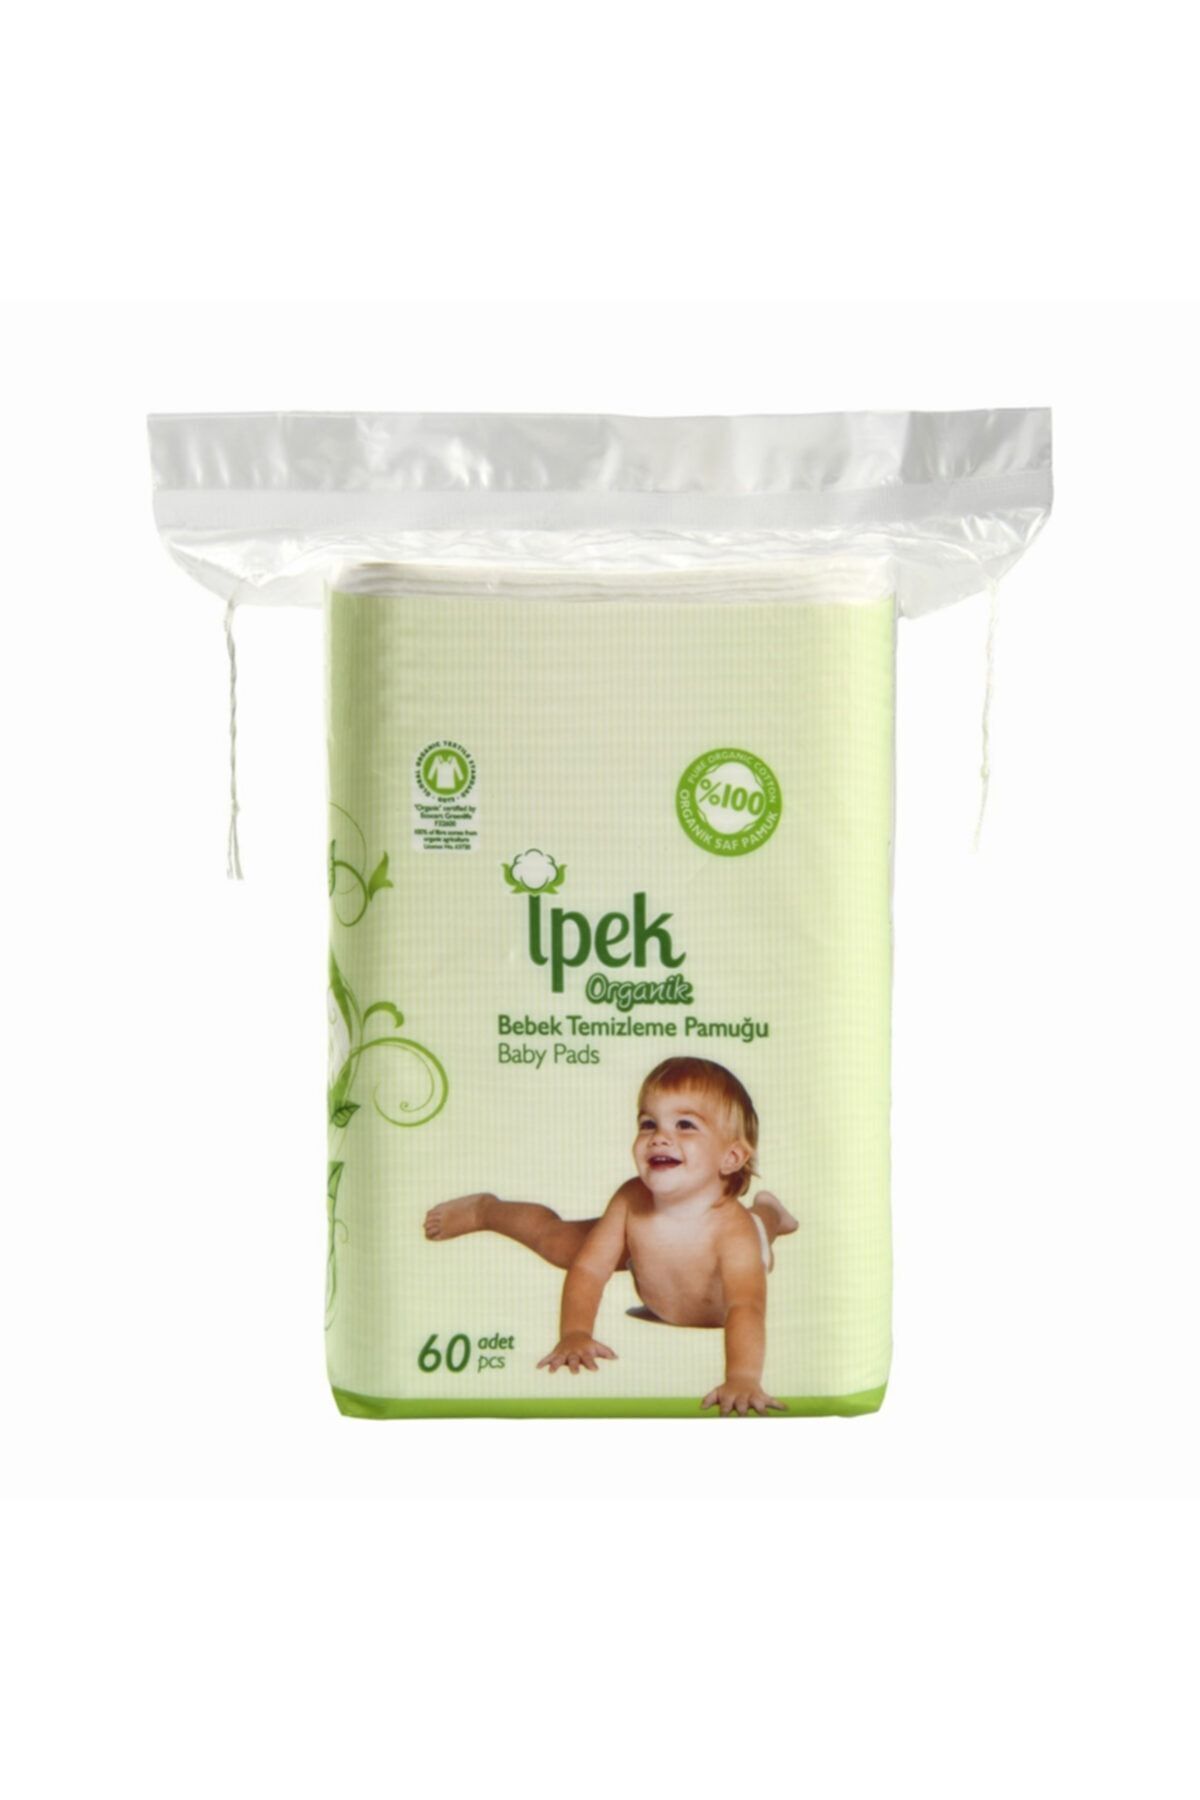 İpek Ipek Organik Bebek Temizleme Pamuğu - 60 Adetli - Pamuk